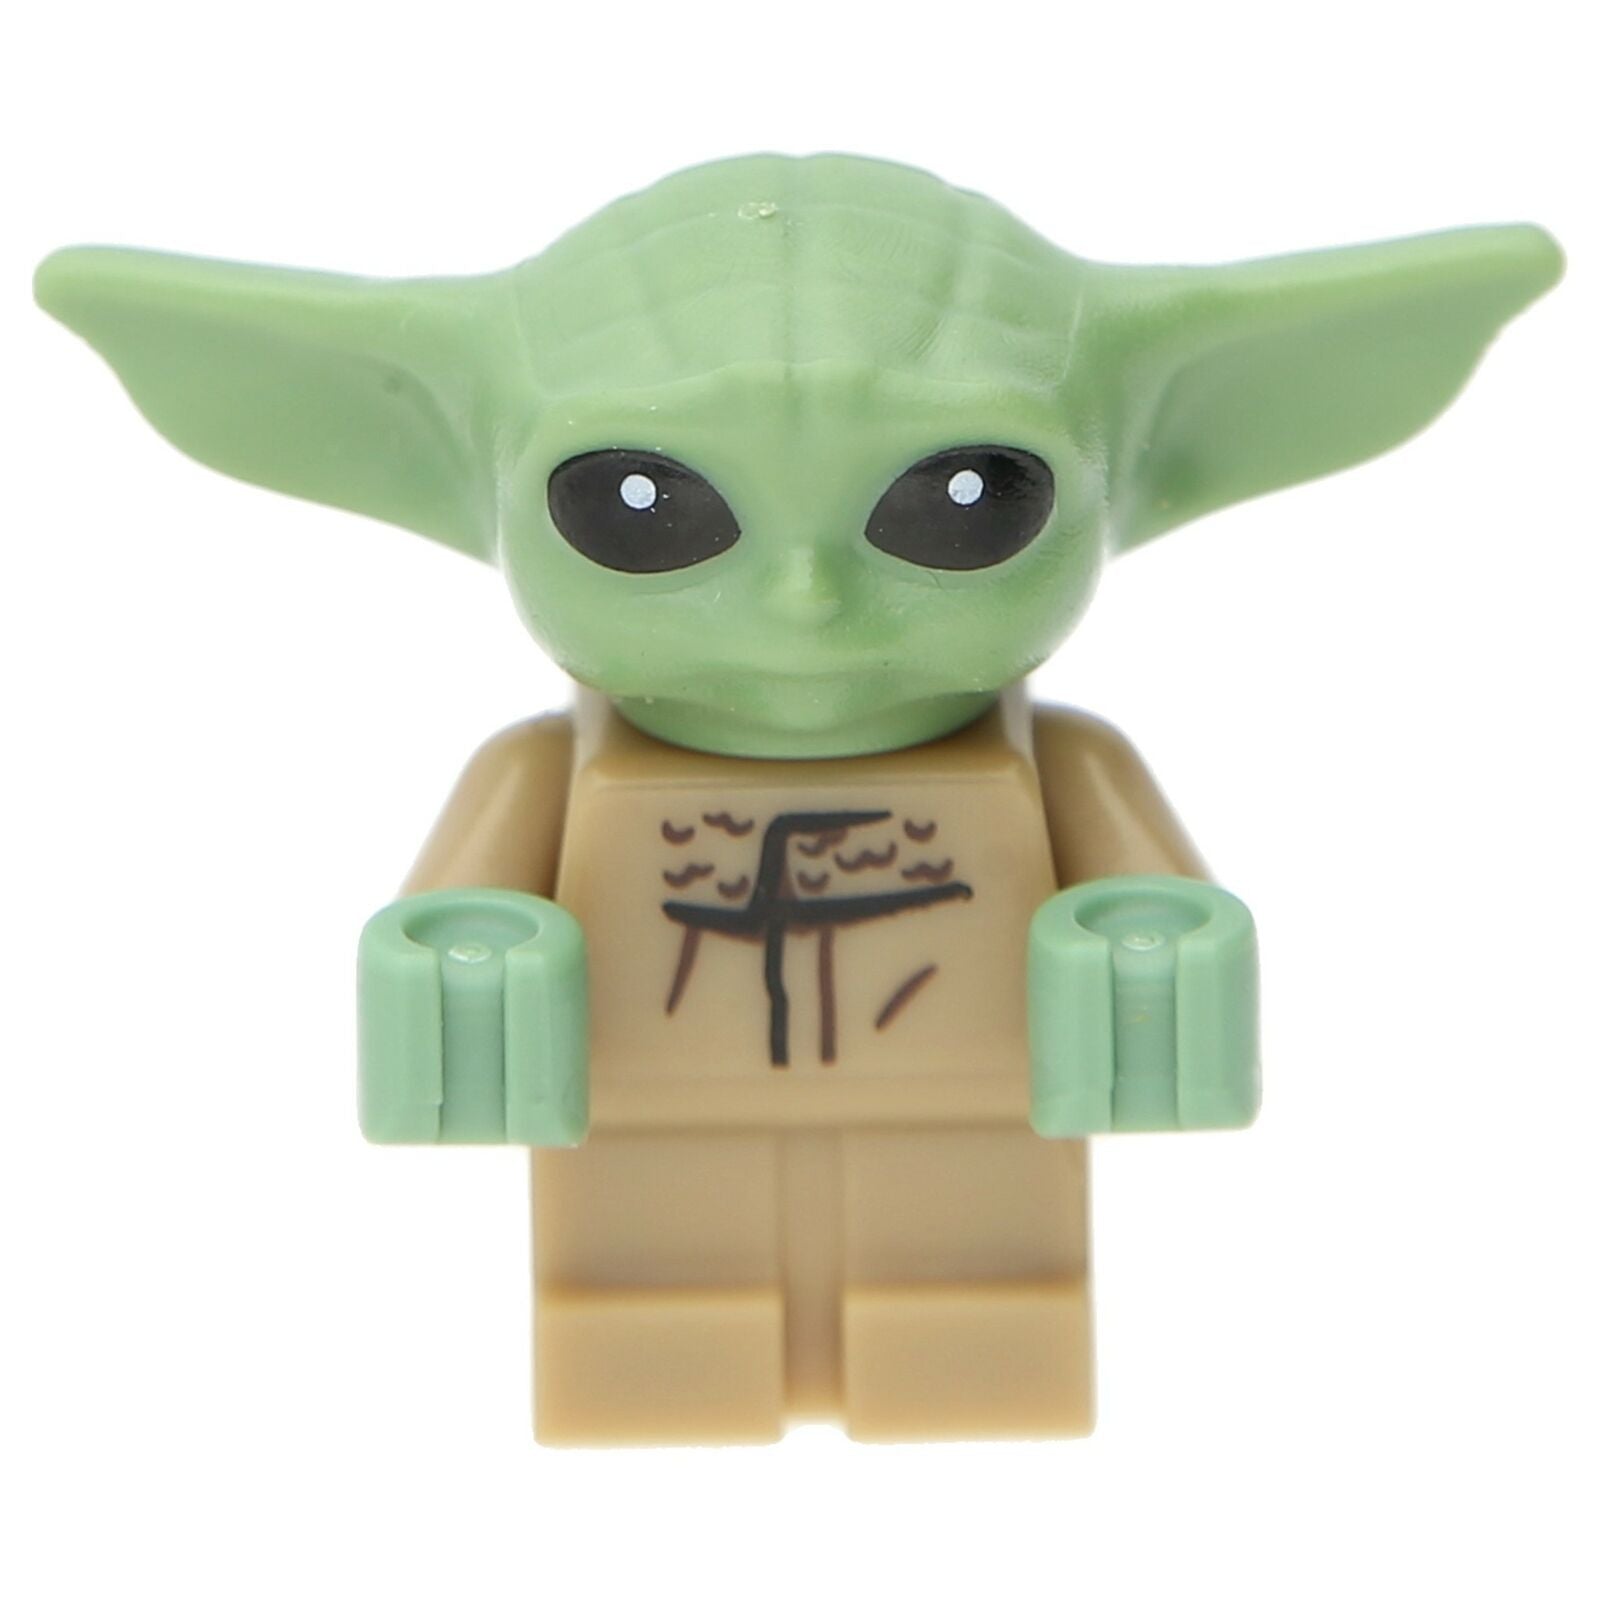 LEGO Star Wars Minifigure - Grogu (The Child)